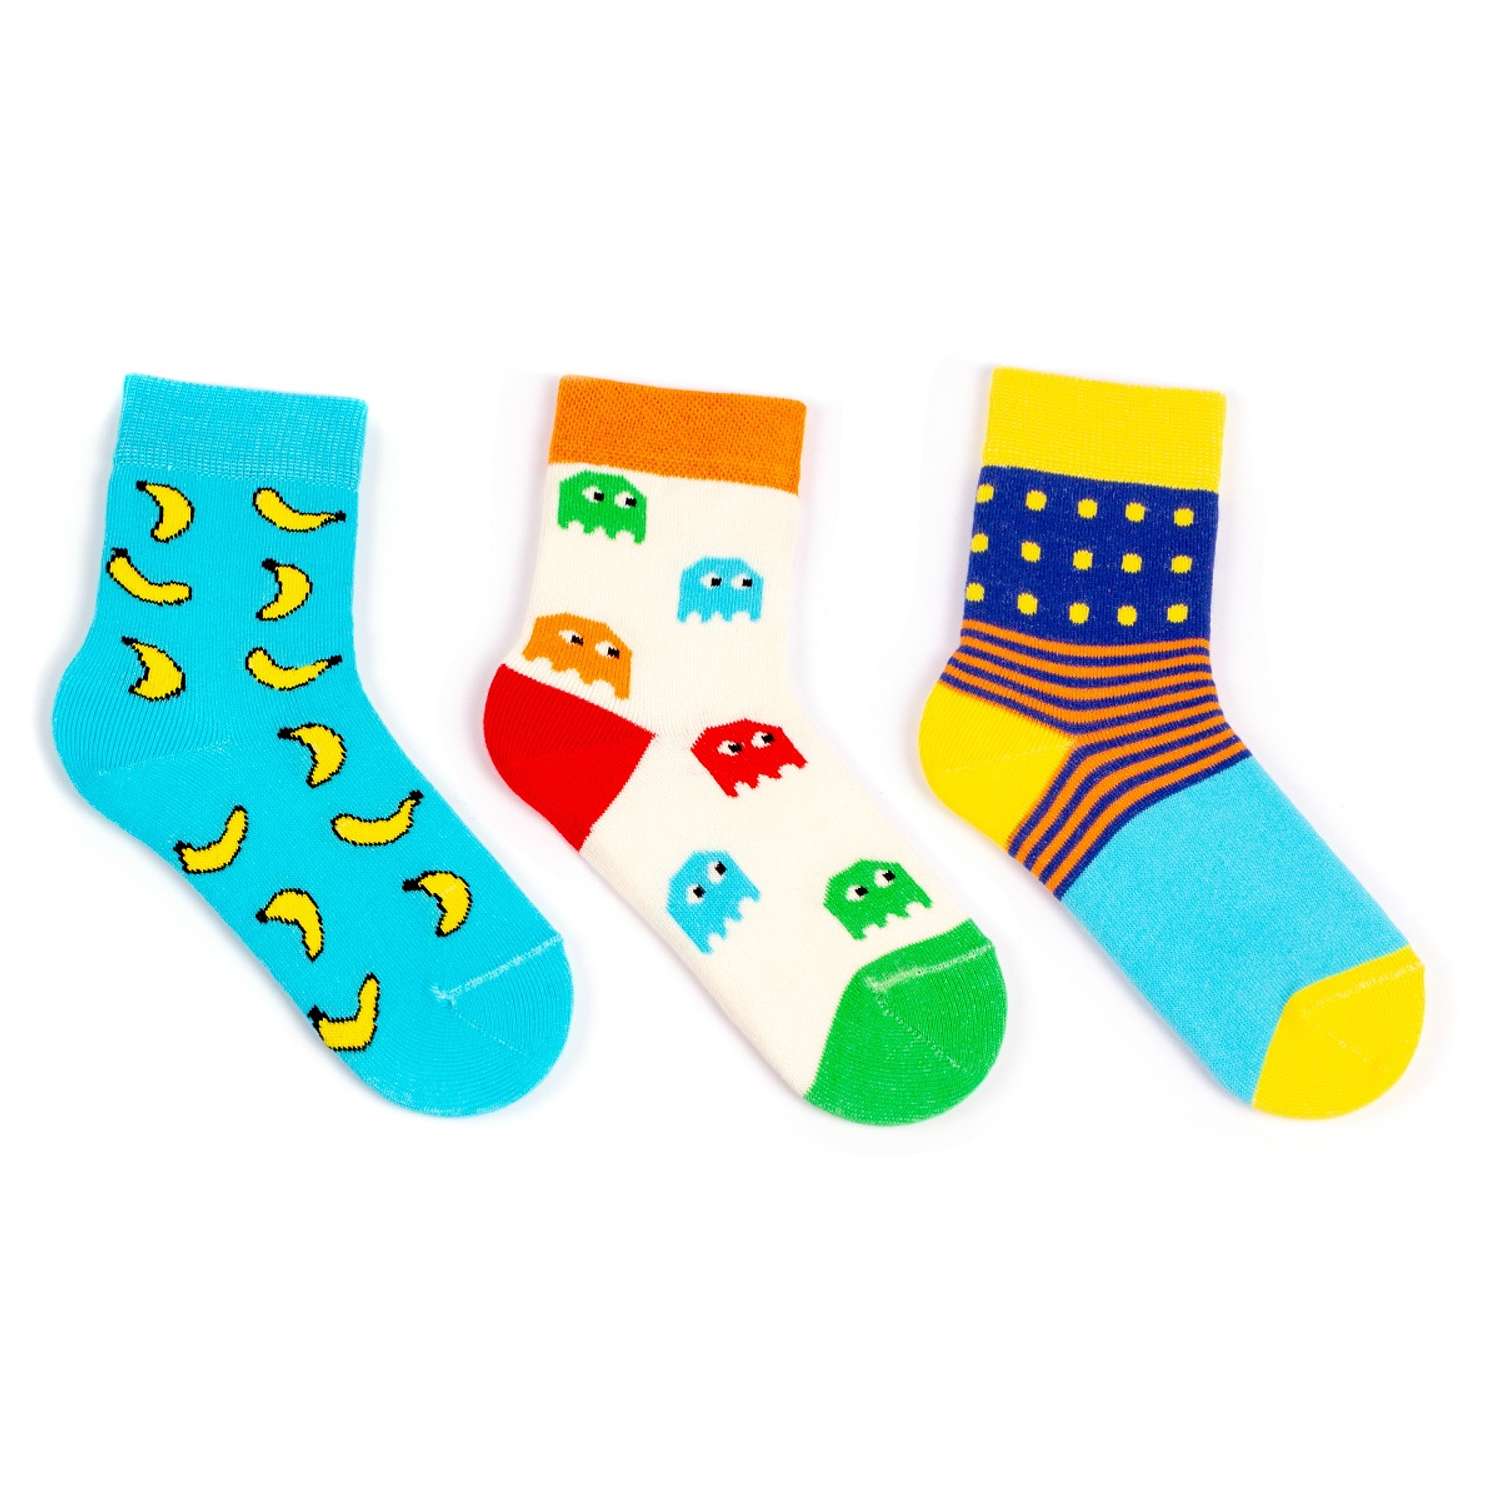 Носочки пара. Носки для детей. Яркие детские носки. Носки детские цветные. Носки разноцветные для детей.